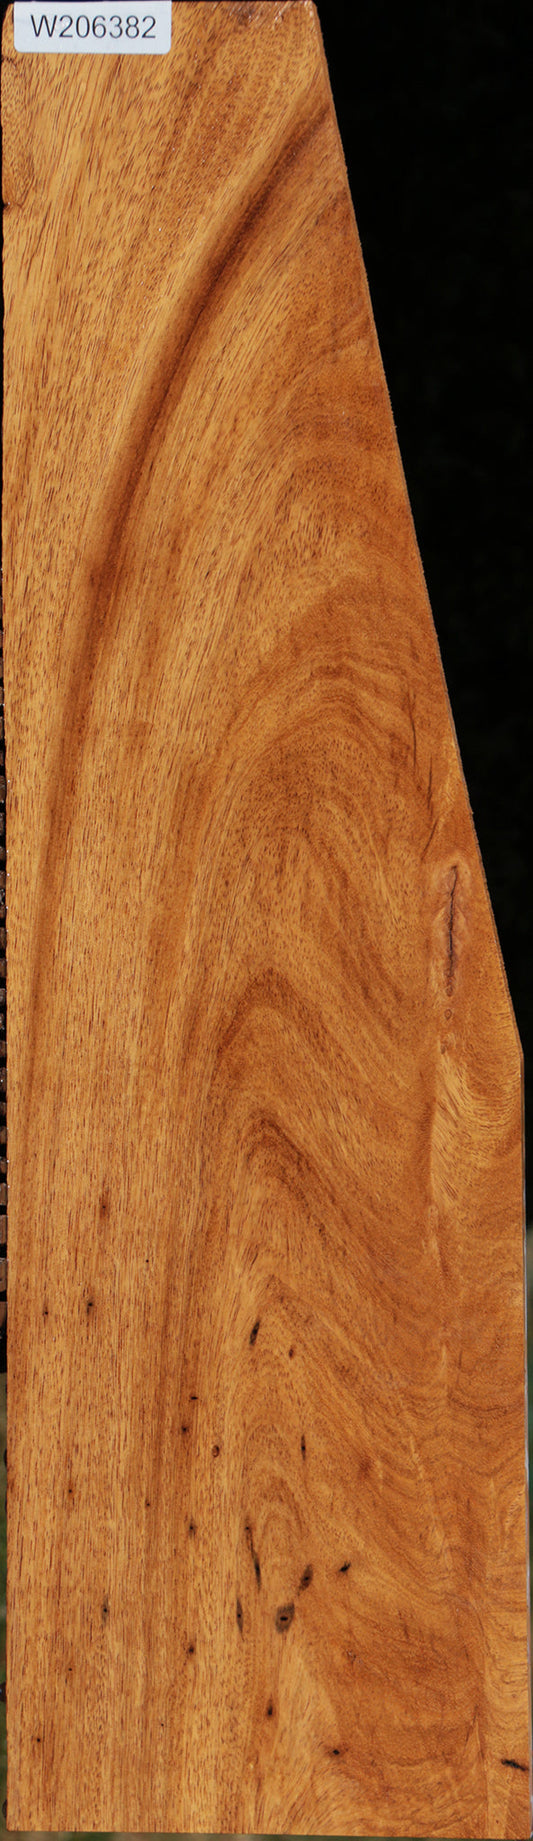 Figured Crotchwood Cerejeira Micro Lumber